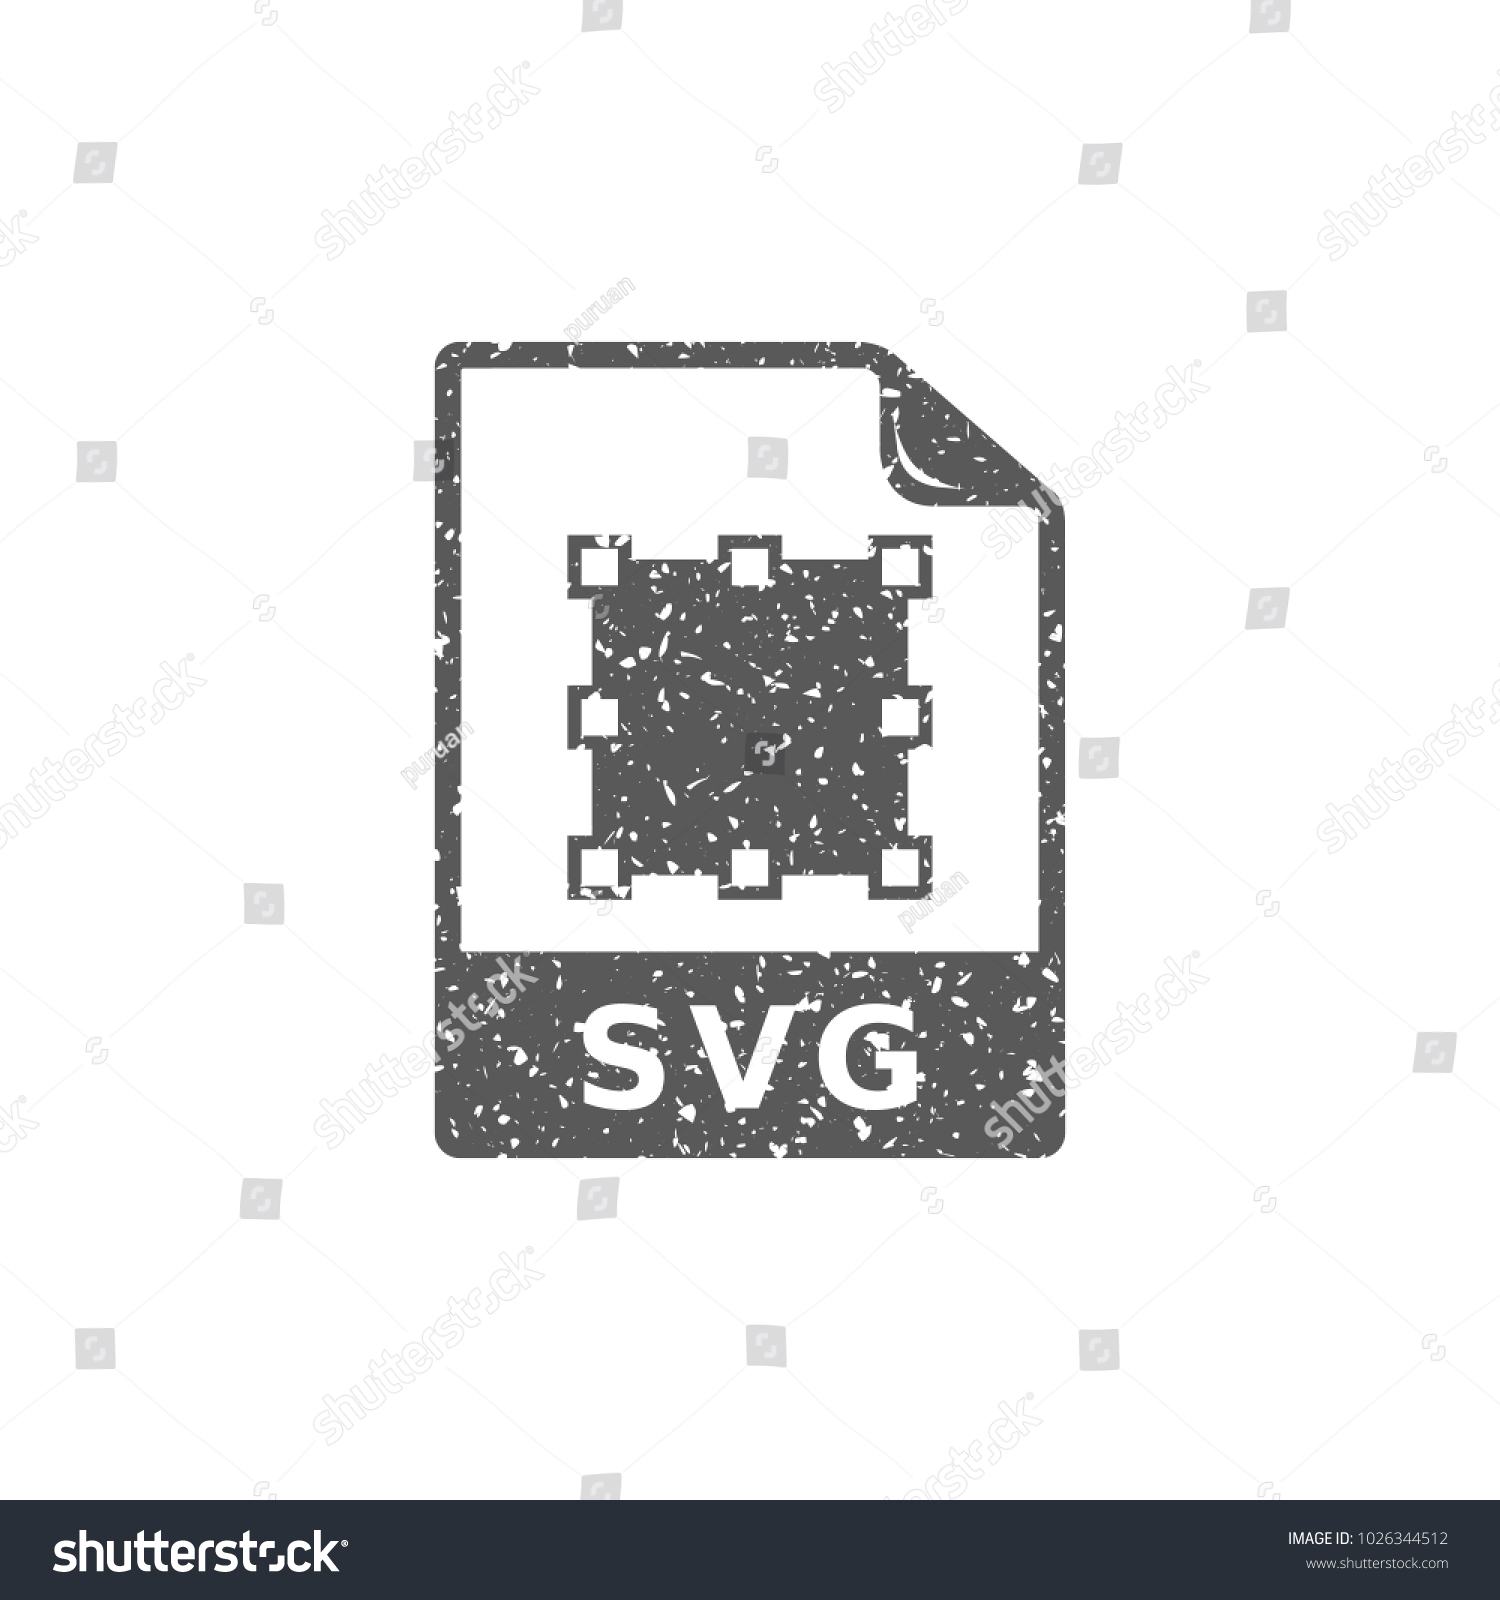 SVG of SVG file icon in grunge texture. Vintage style vector illustration. svg